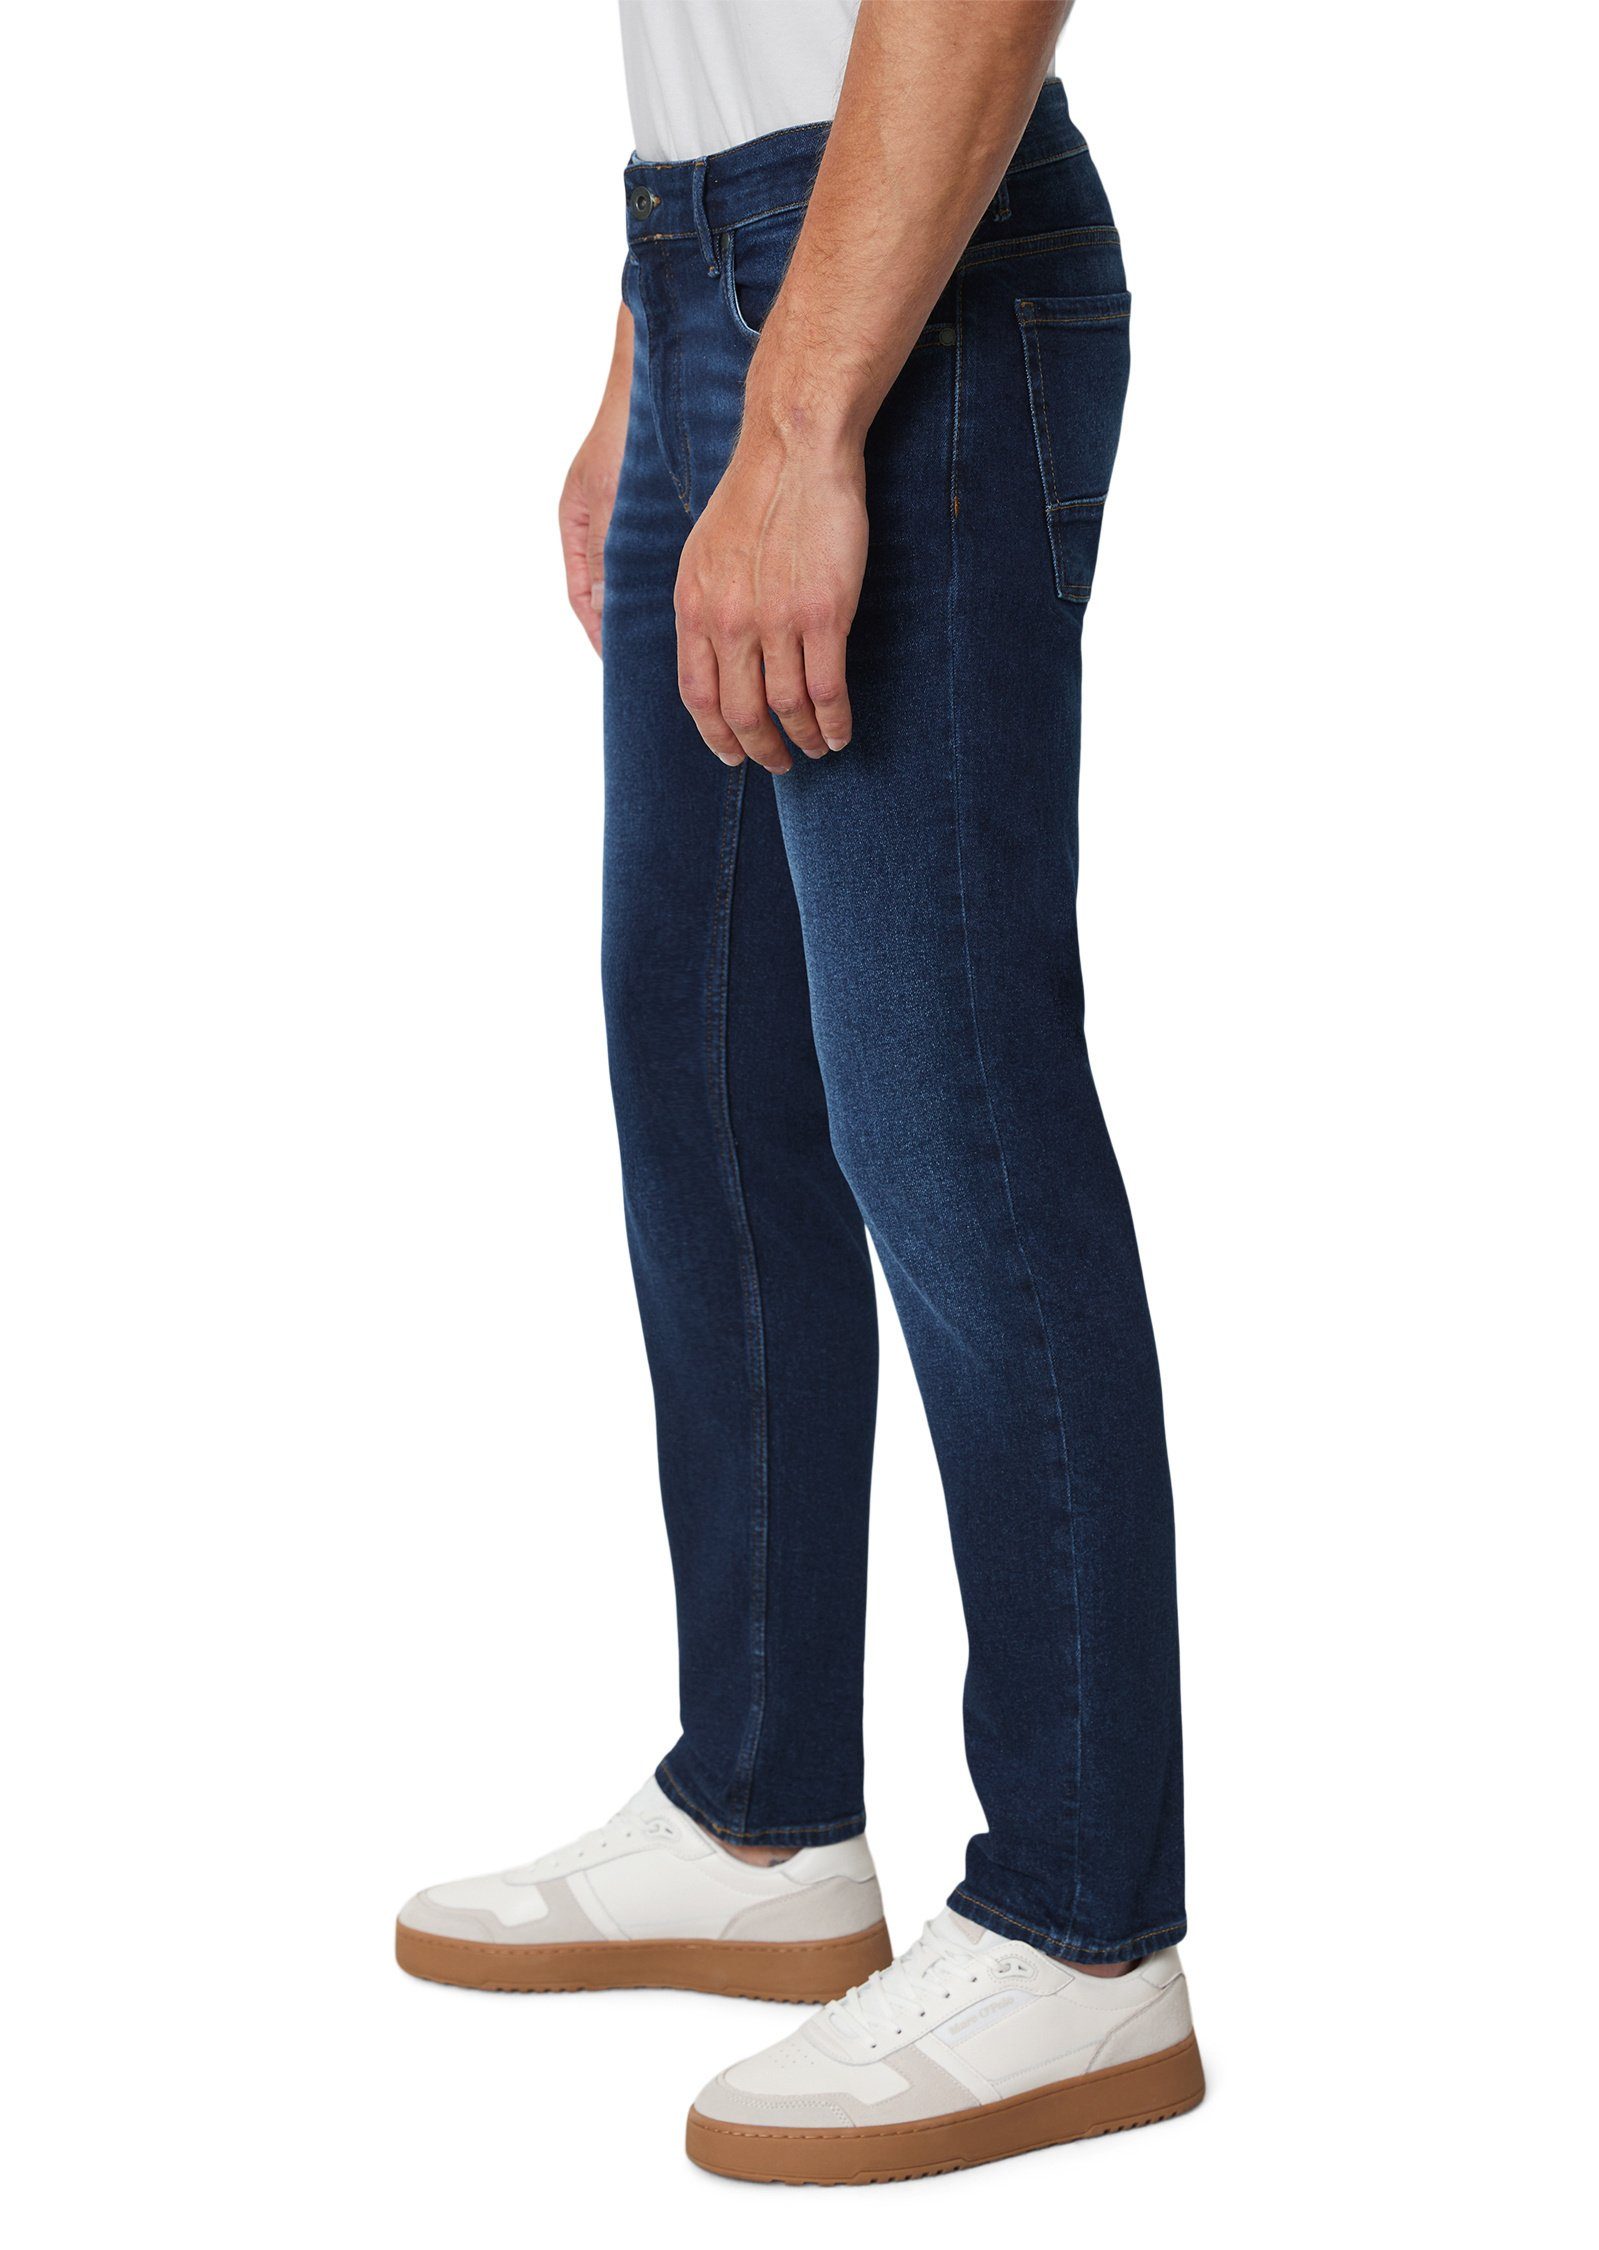 Marc O'Polo Bio-Baumwolle-Mix 5-Pocket-Jeans dunkelblau aus